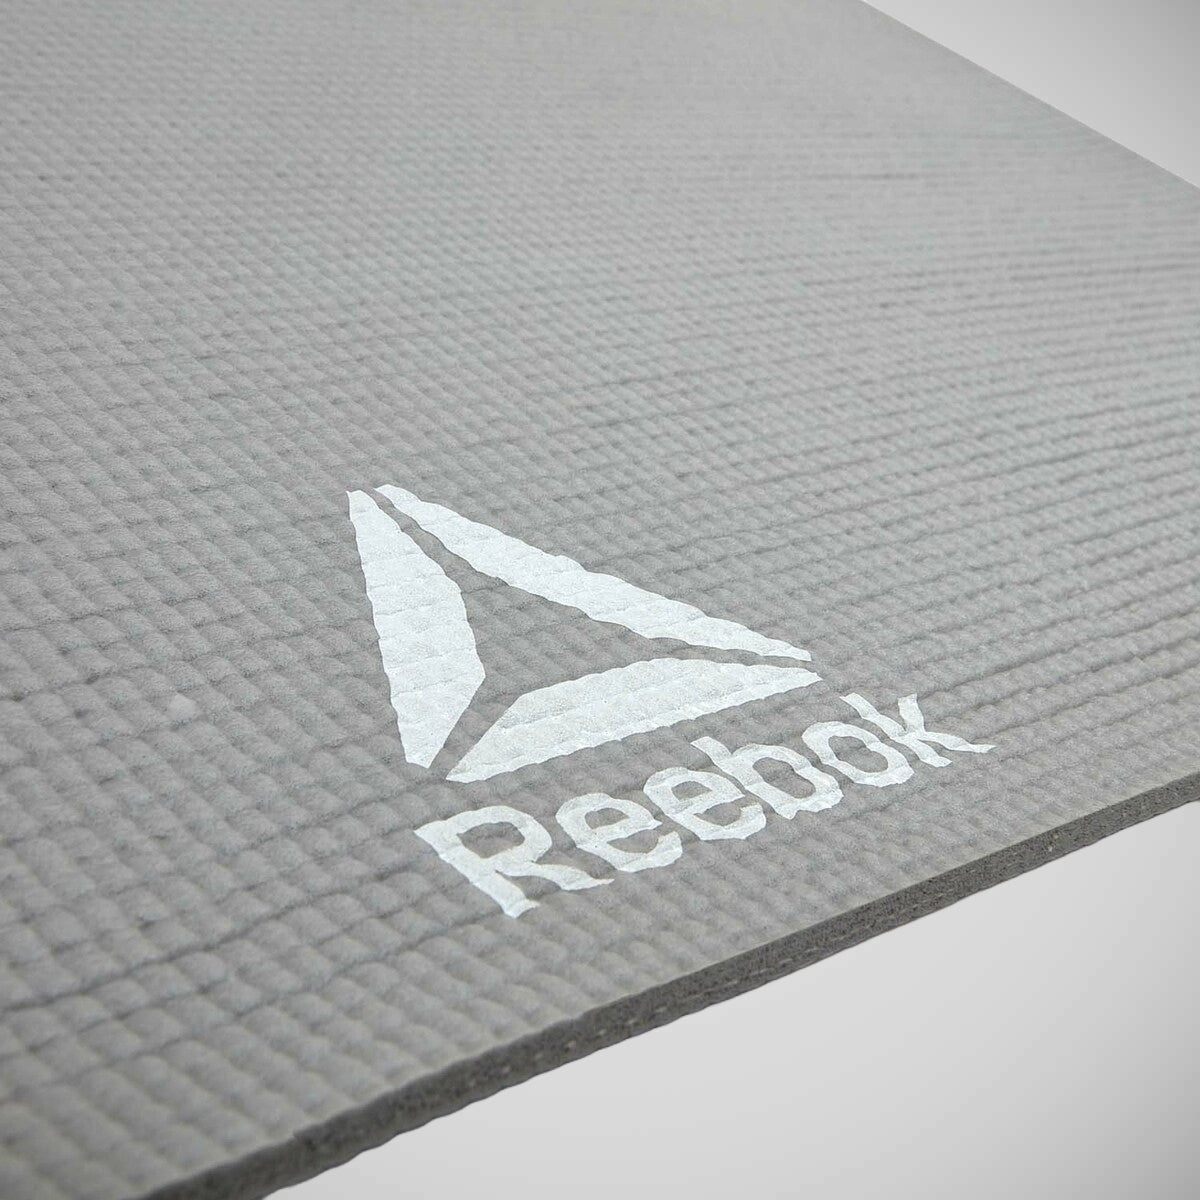 Reebok Double Sided 4mm Yoga Mat Grey